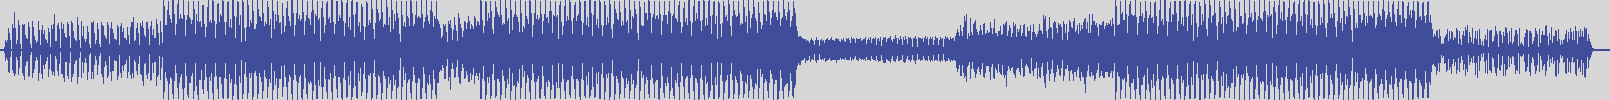 nf_boyz_records [NFY090] Brooklyn Boyz - Party On The River [Club Maschio Mix] audio wave form